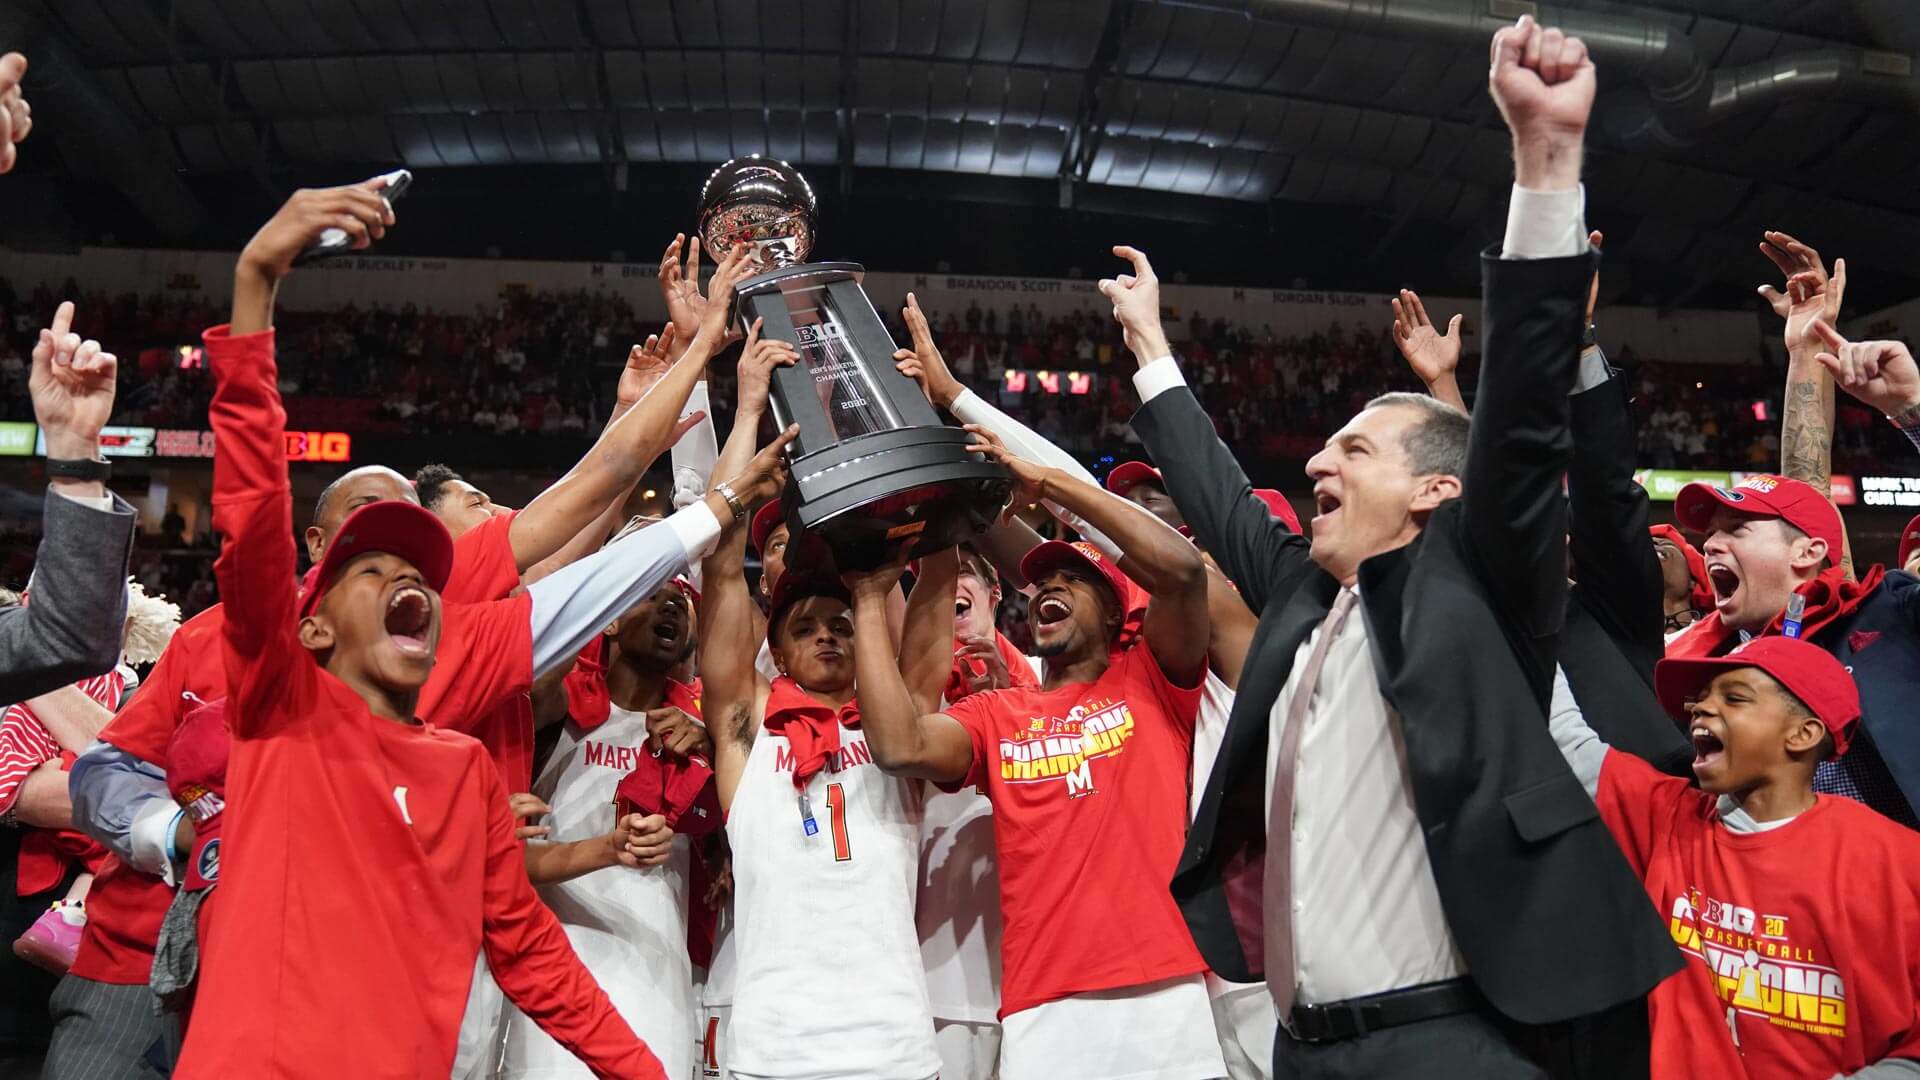 Maryland men's basketball team celebrates with Big Ten trophy